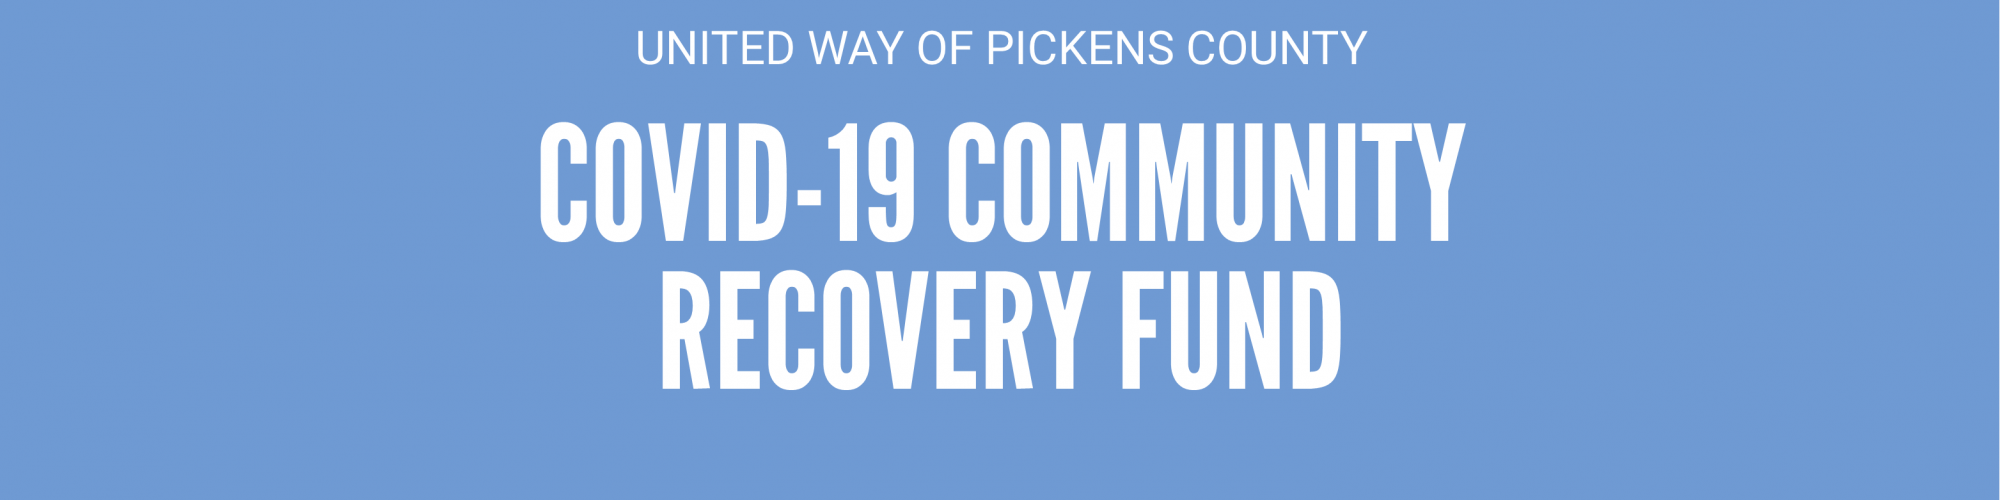 COVID-19 Community Relief Fund